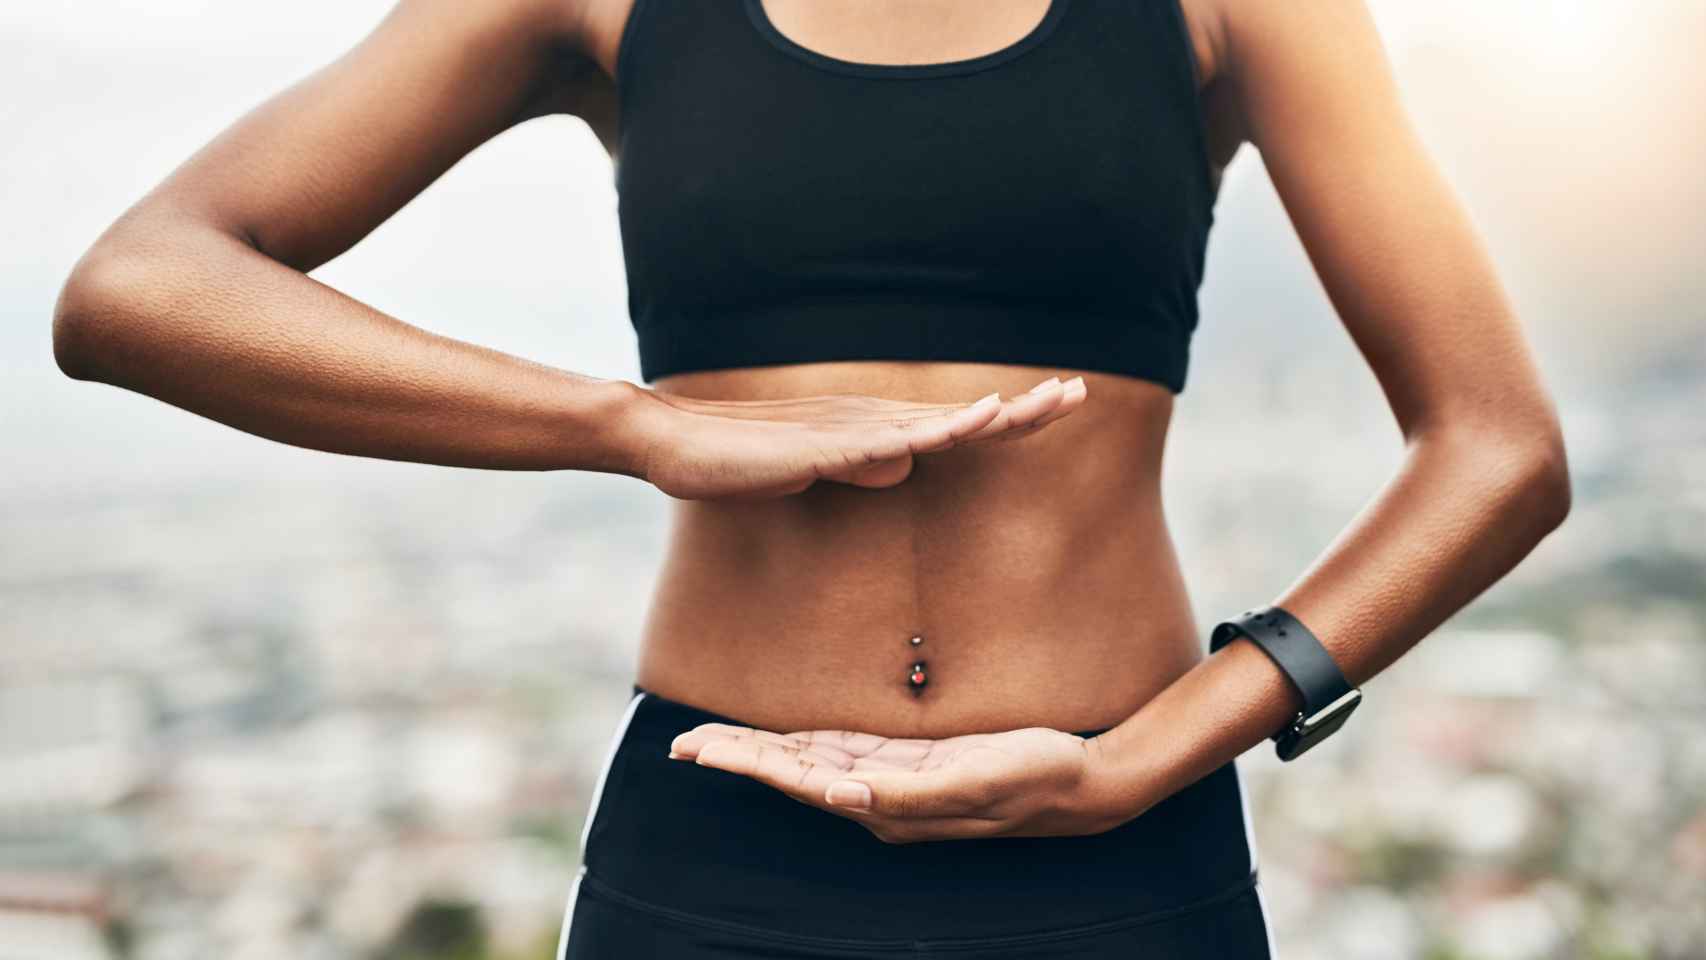 Rutina para abdomen plano en casa: ¡5 ejercicios fáciles!